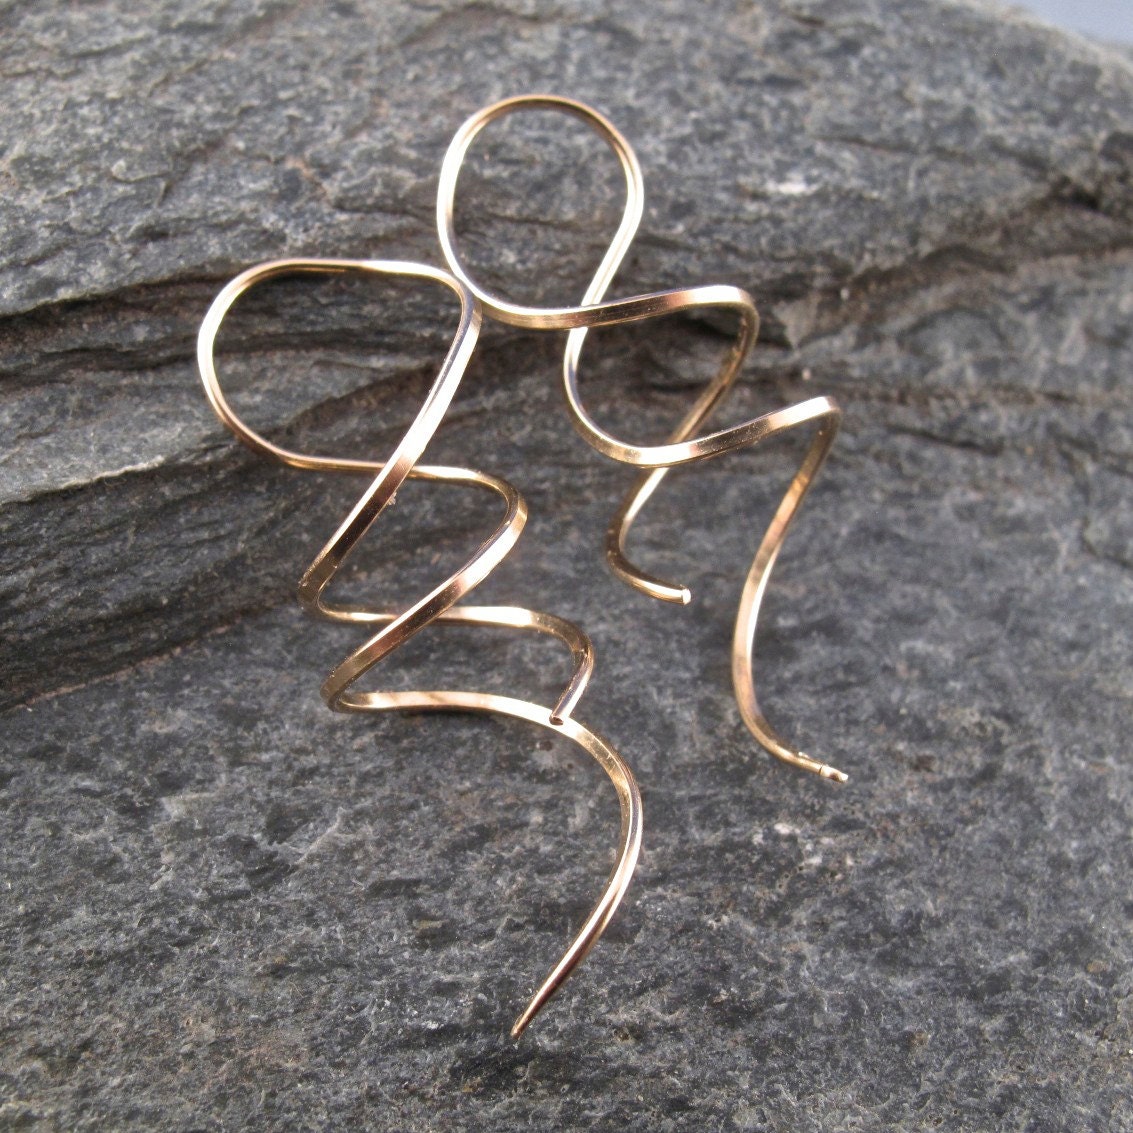 Buy Openwork Dangle Earrings In 14K Yellow Gold Plated Sterling Silver,  Silver Drop Earrings For Women at ShopLC.